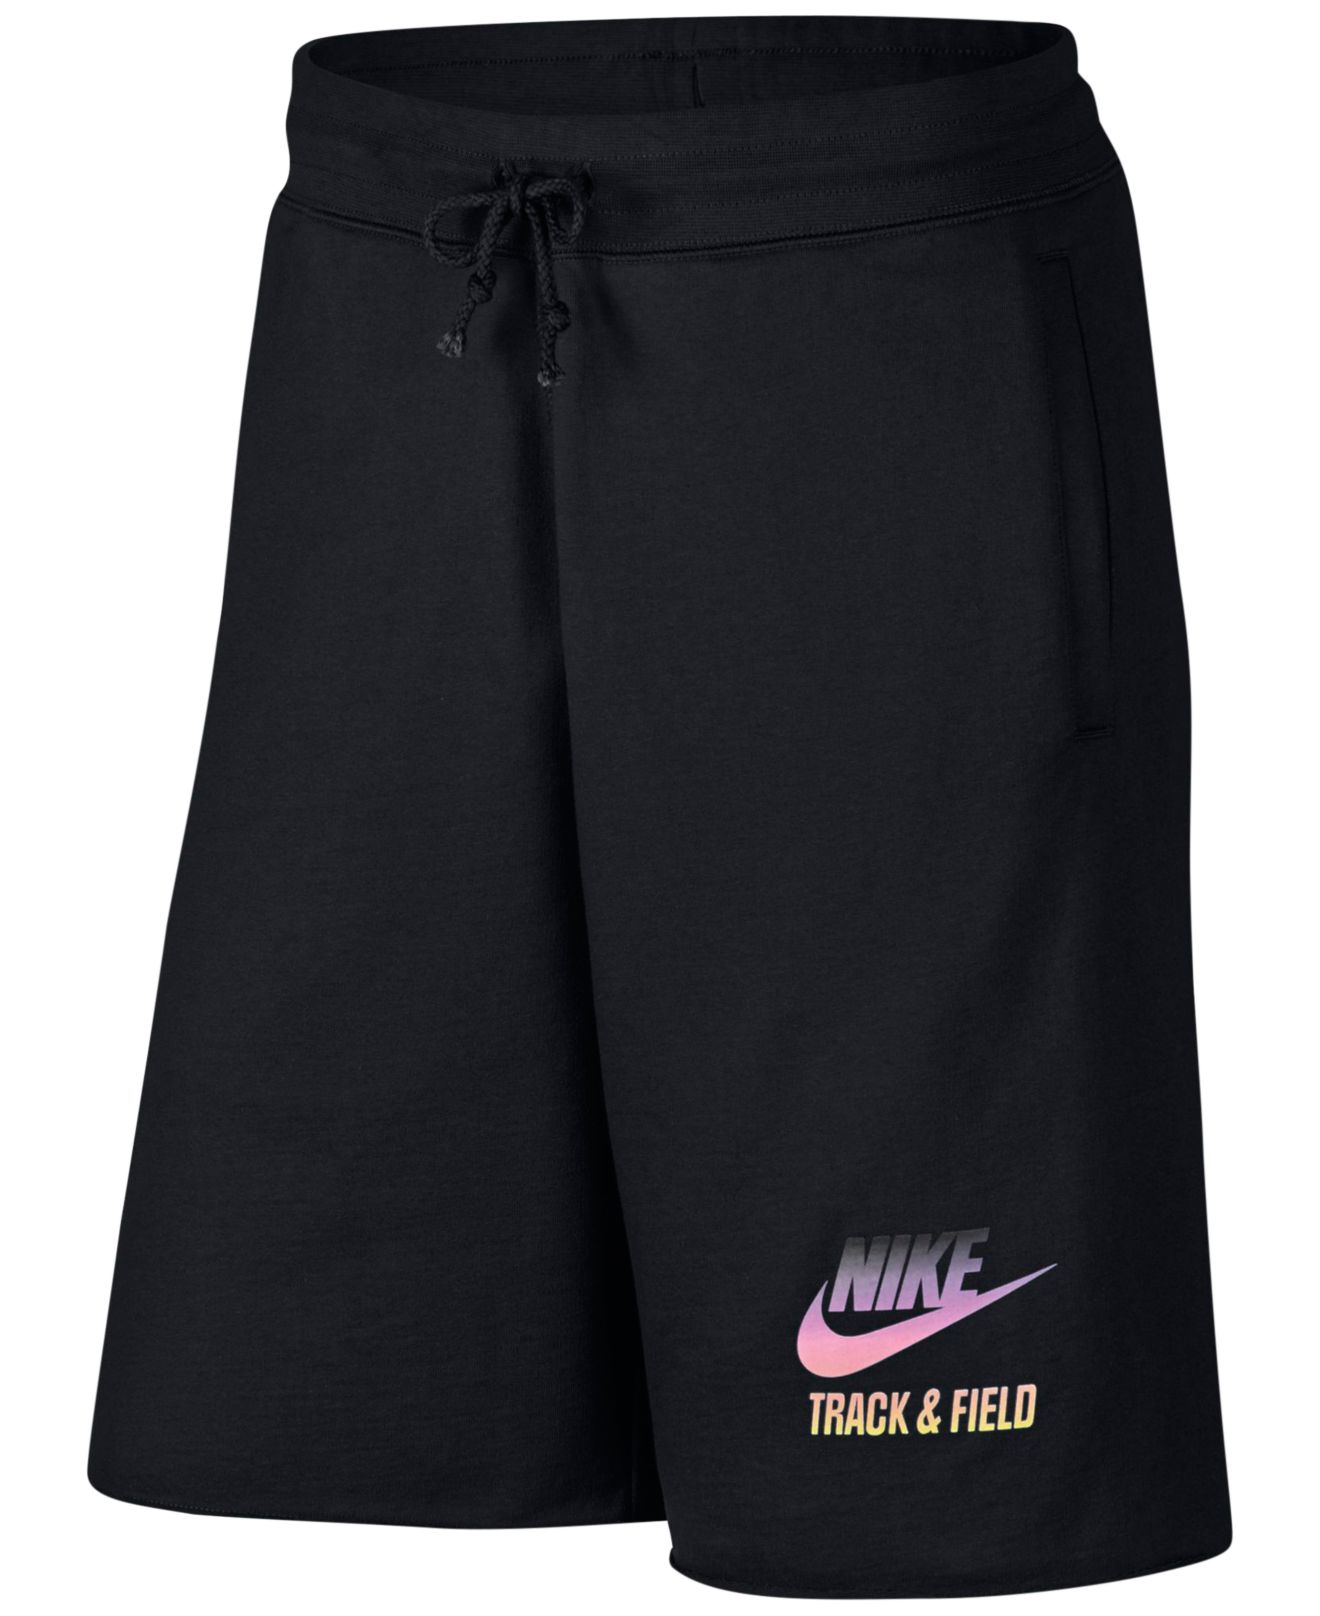 Nike Track & Field Alumni Running Shorts in Black for Men - Lyst